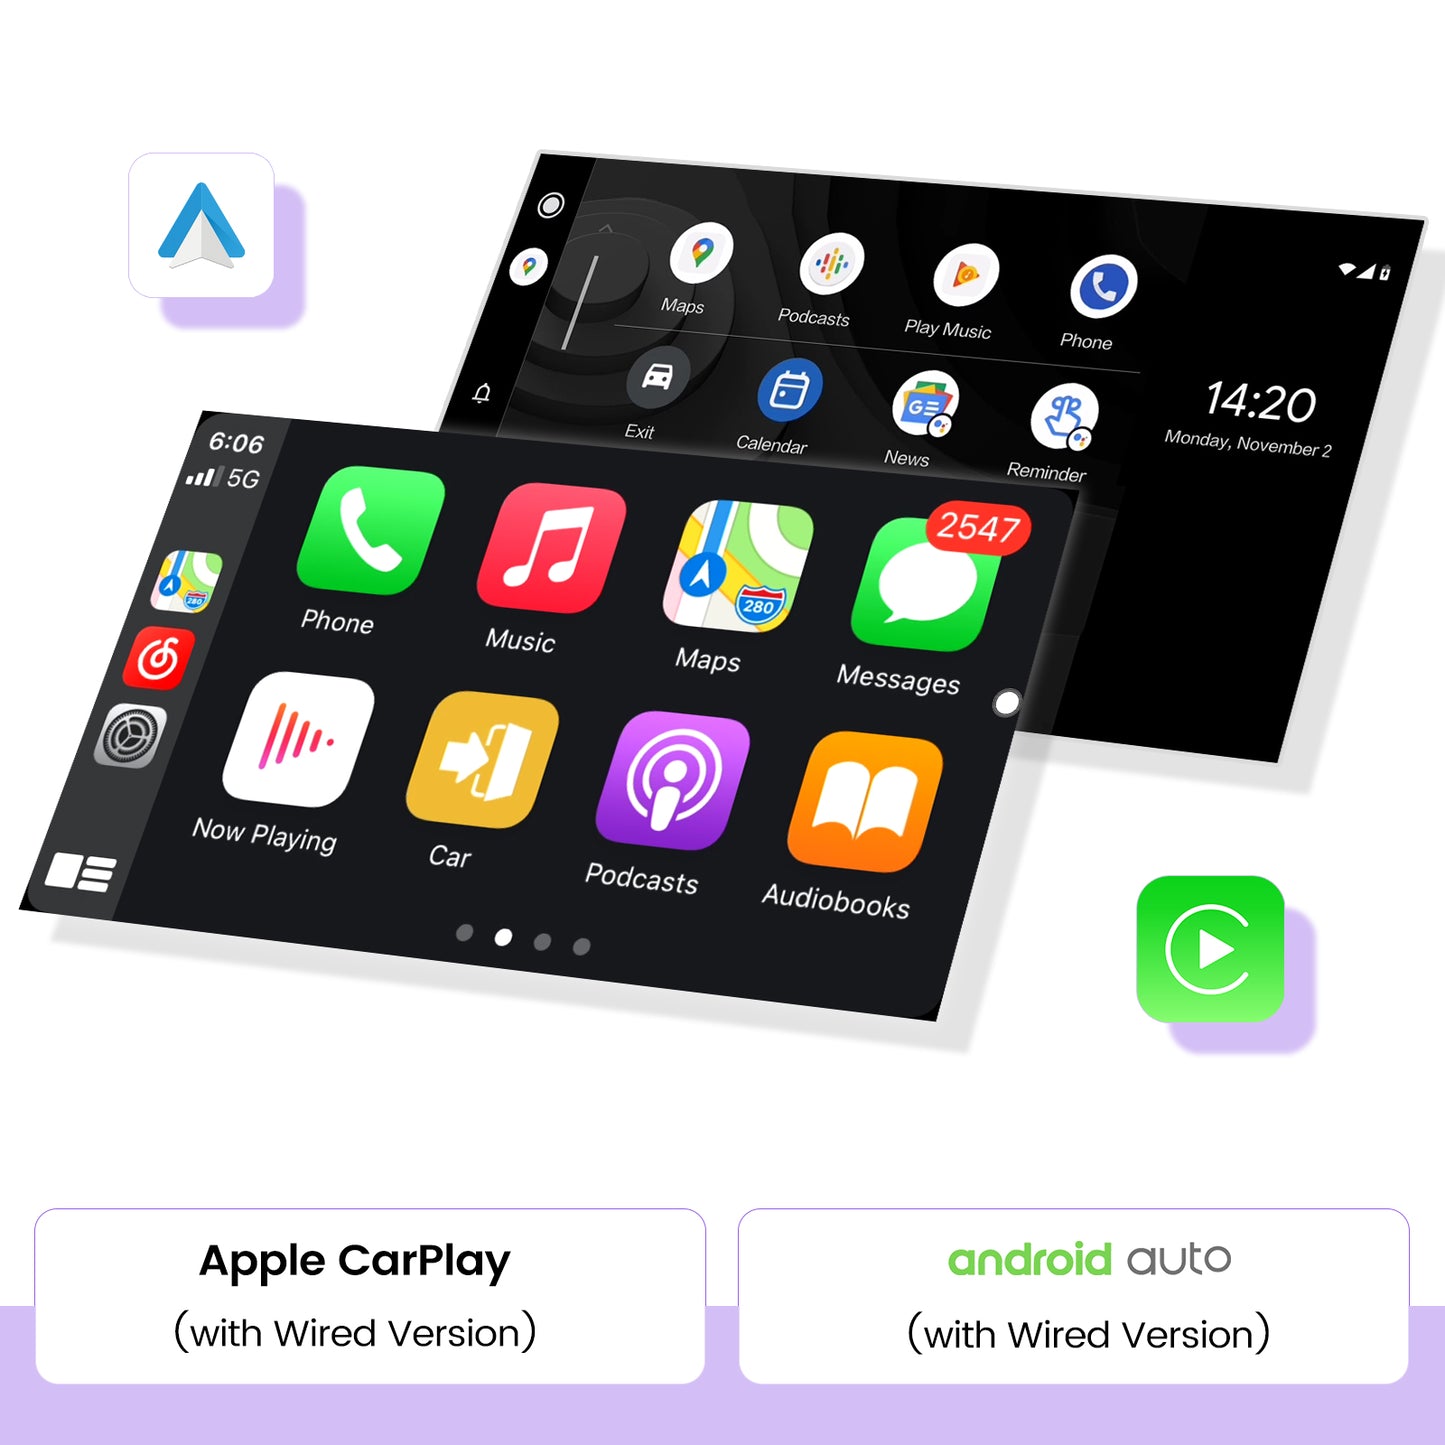 Roadanvi F10 for Toyota Corolla 2014 2015 2016 10.2 inch Apple Carplay Android Auto Touch screen AI Voice Control 8G 128G TDA7850 5G GPS Navigation